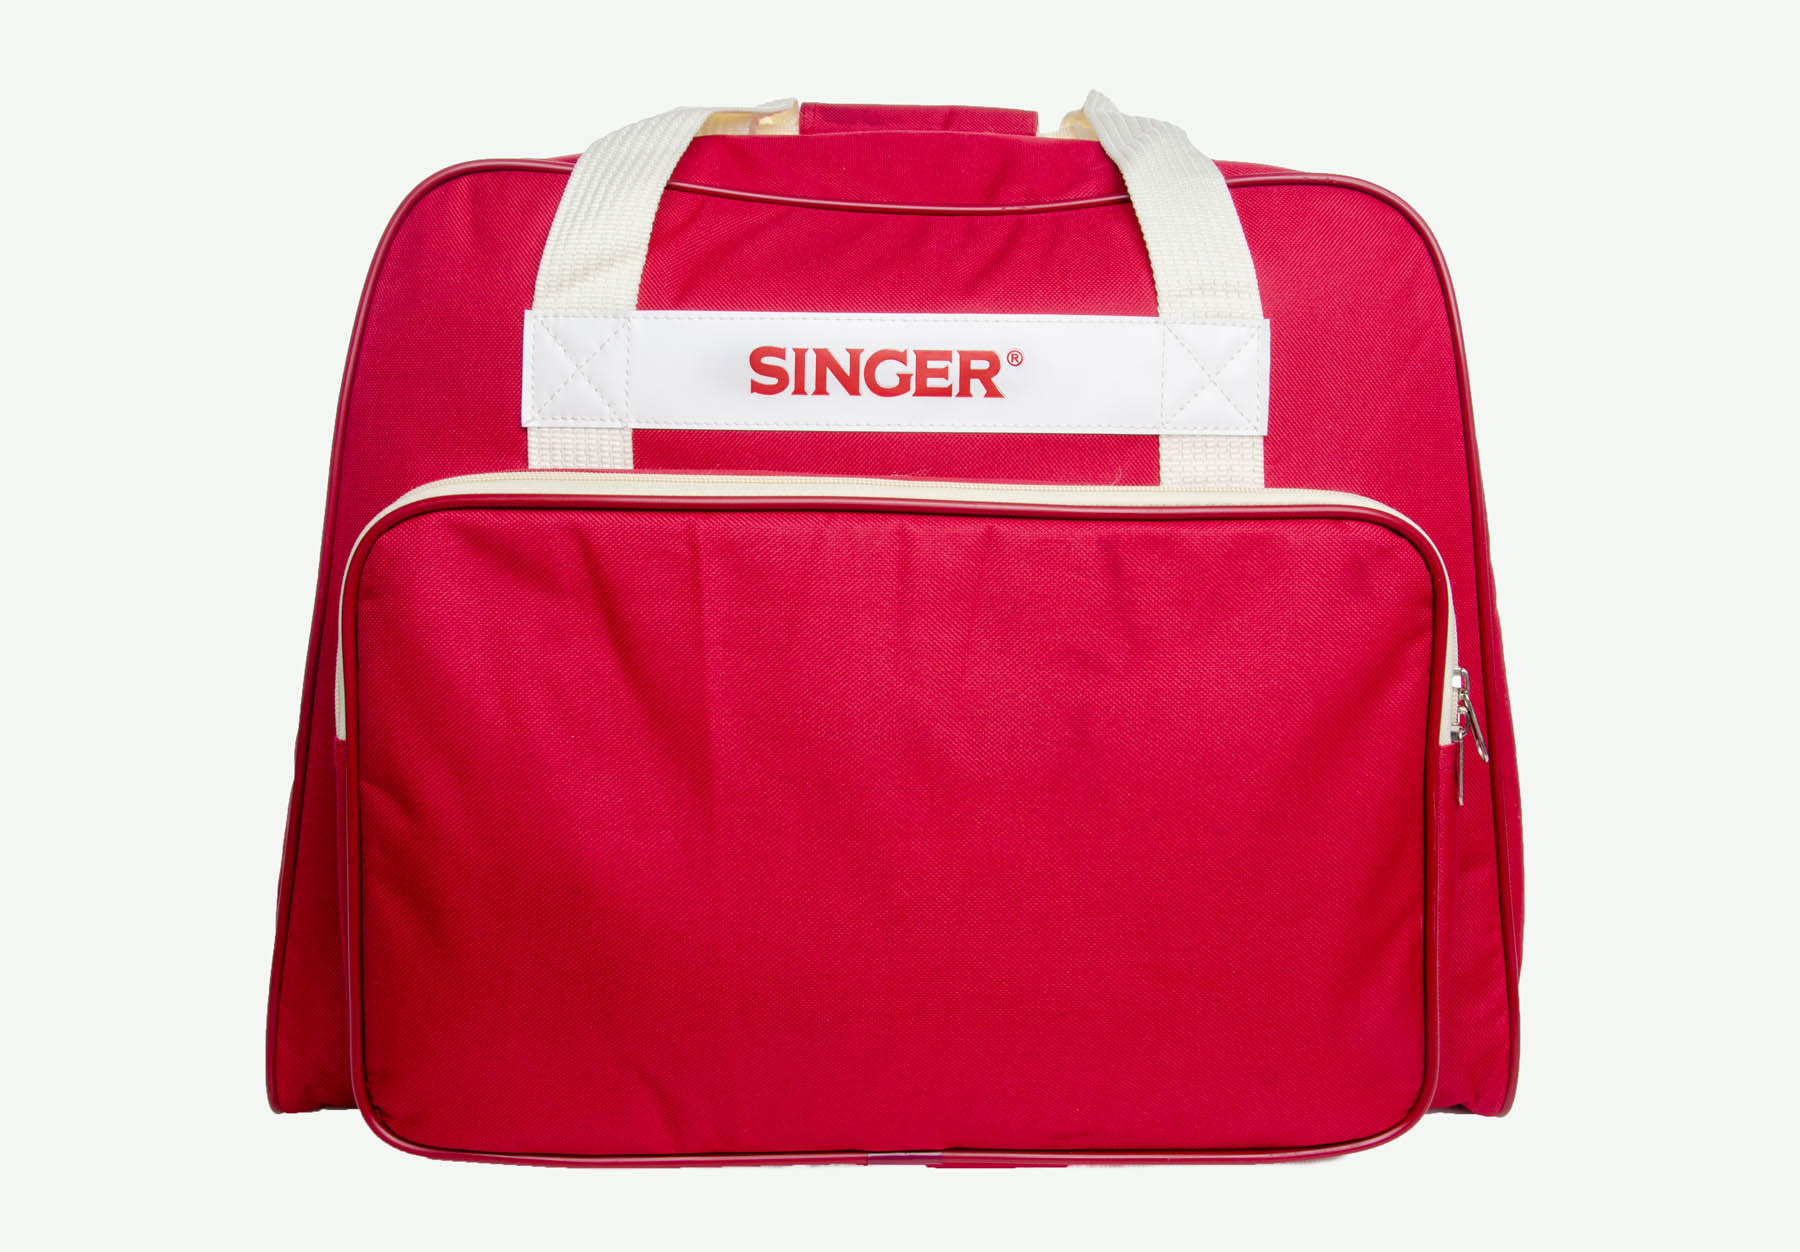 Singer SINGER Universal Canvas Tote Bag - Brick